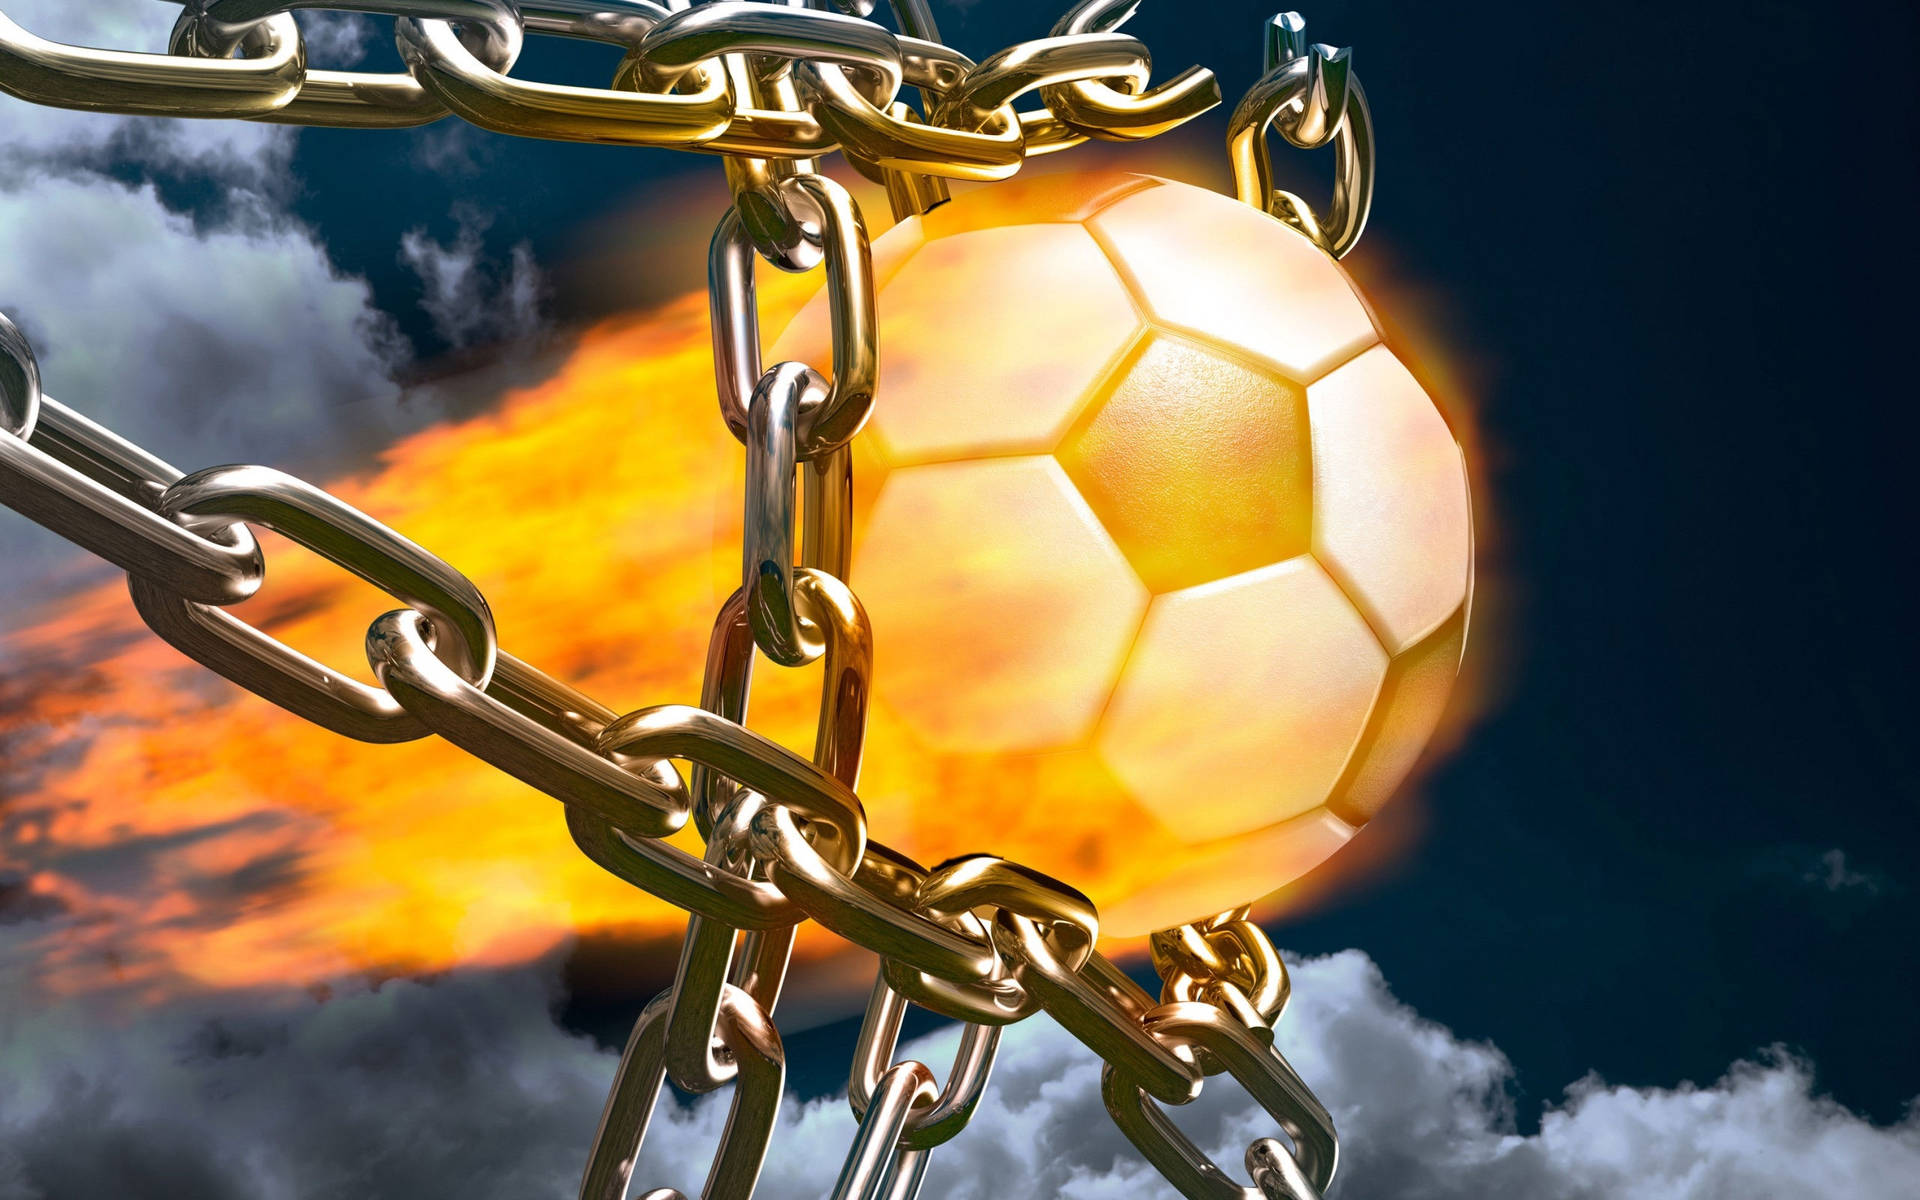 Cool Soccer Ball Fiery Effect